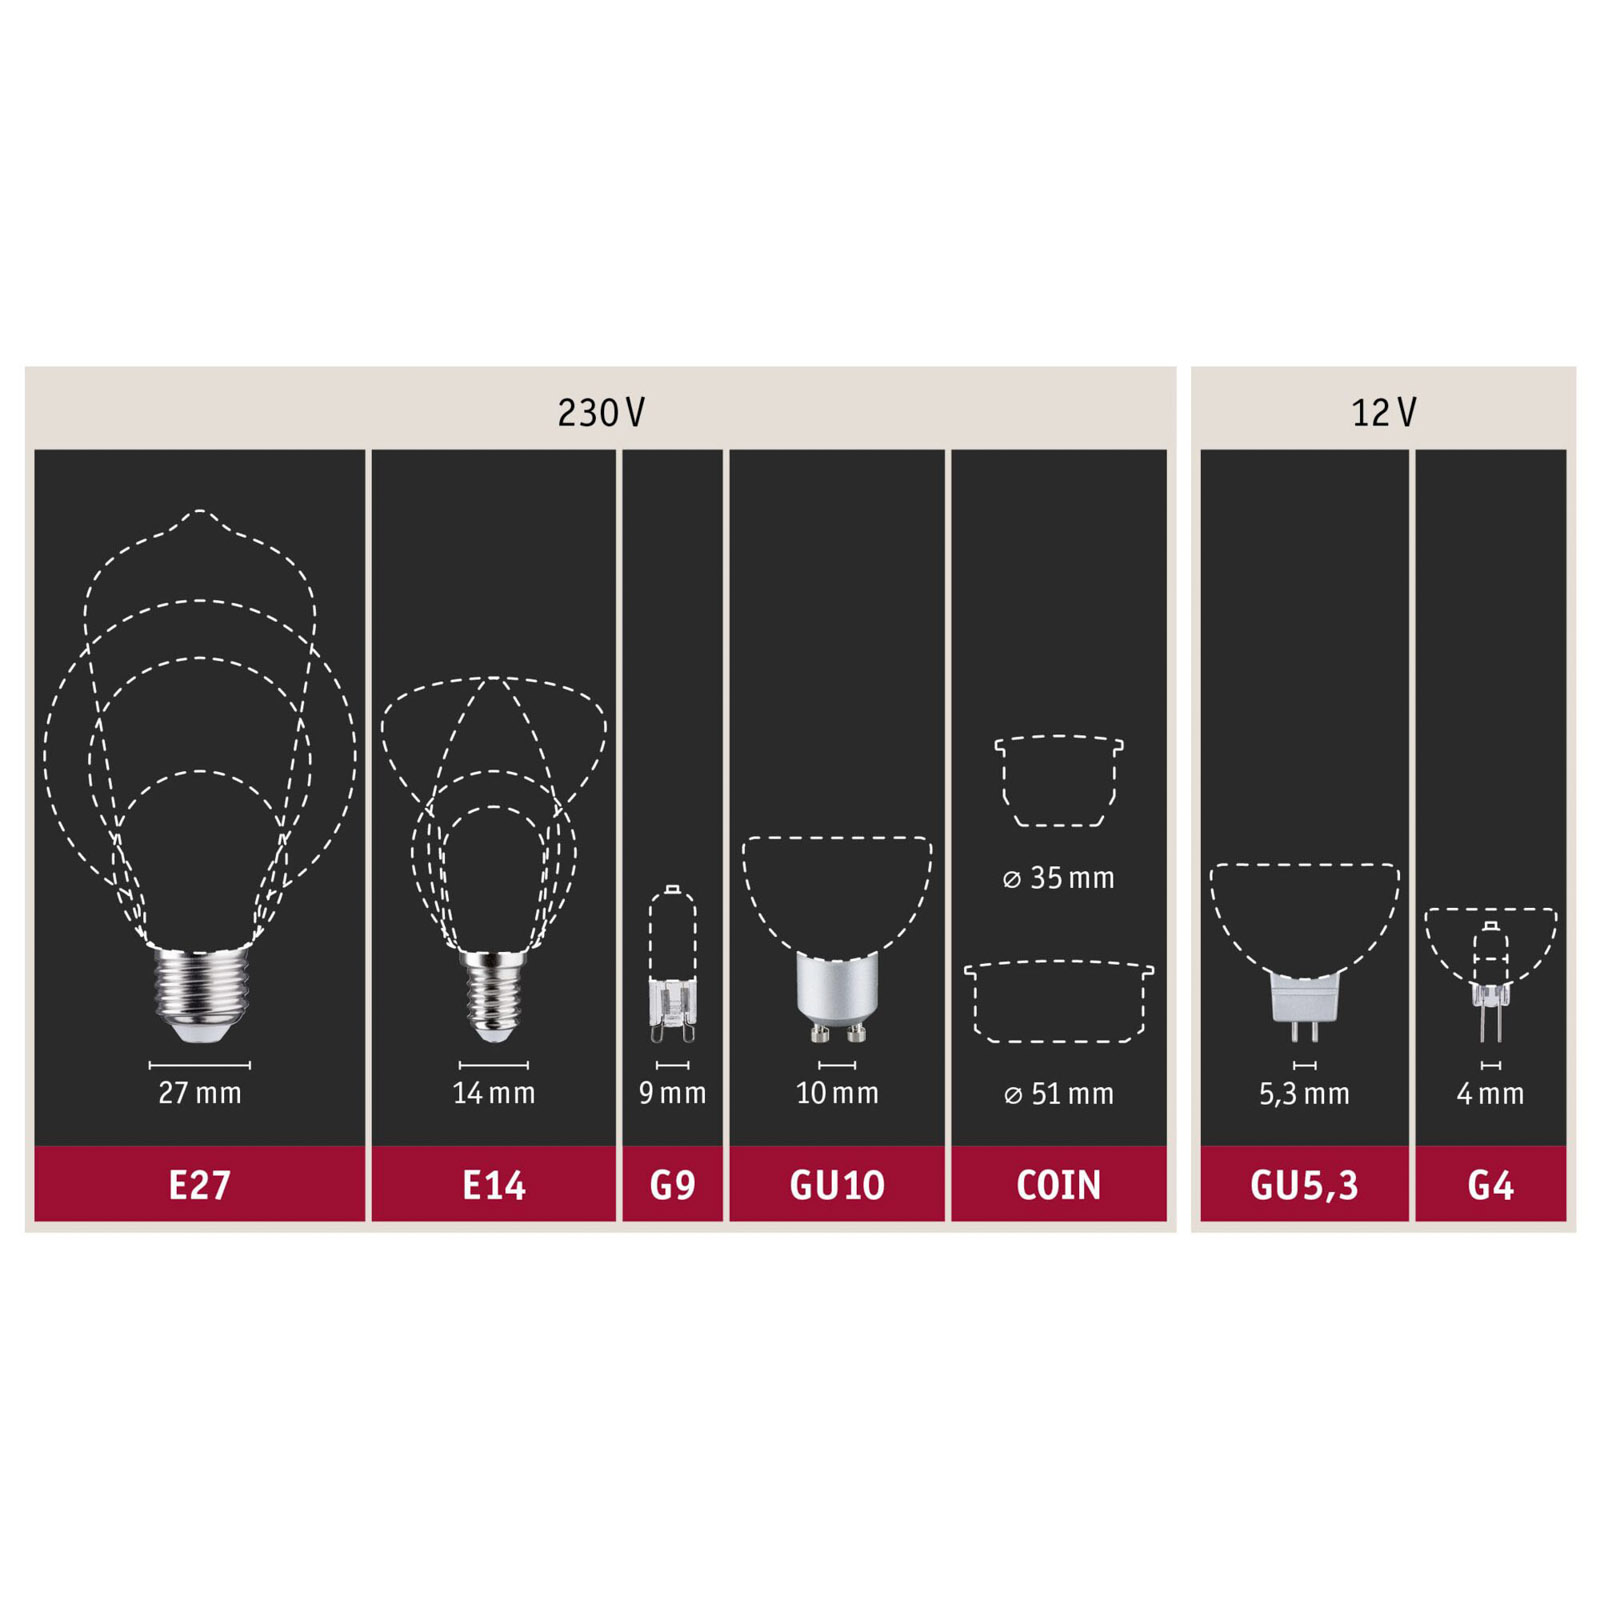 Paulmann LED kopspiegellamp E14 2,6W 827 koper